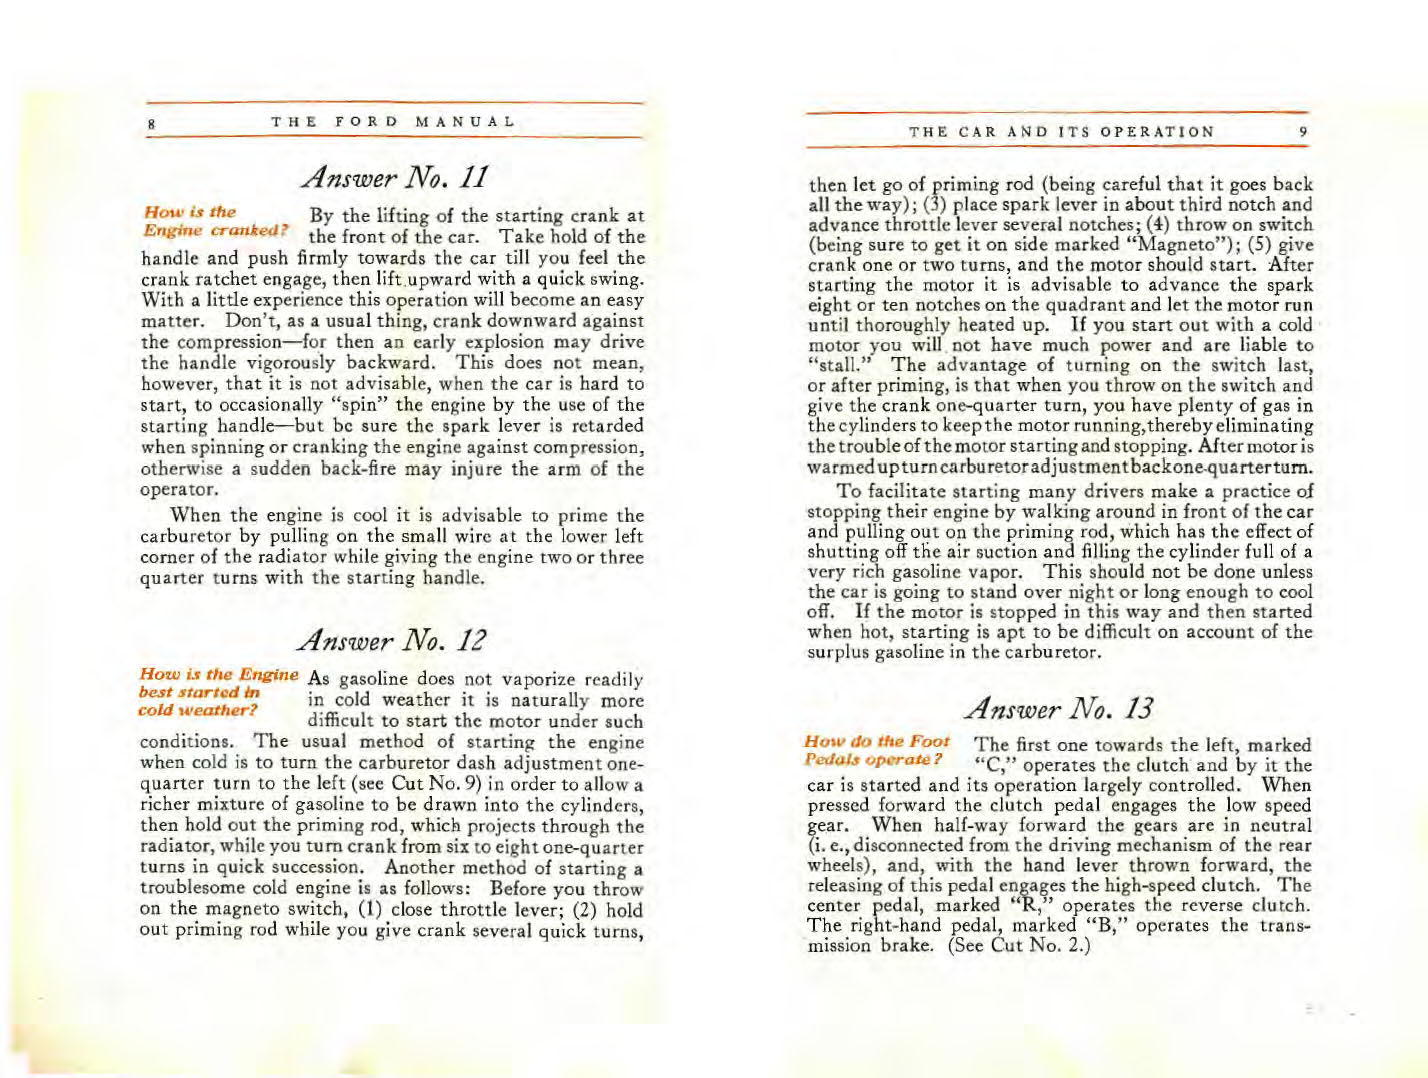 n_1915 Ford Owners Manual-08-09.jpg